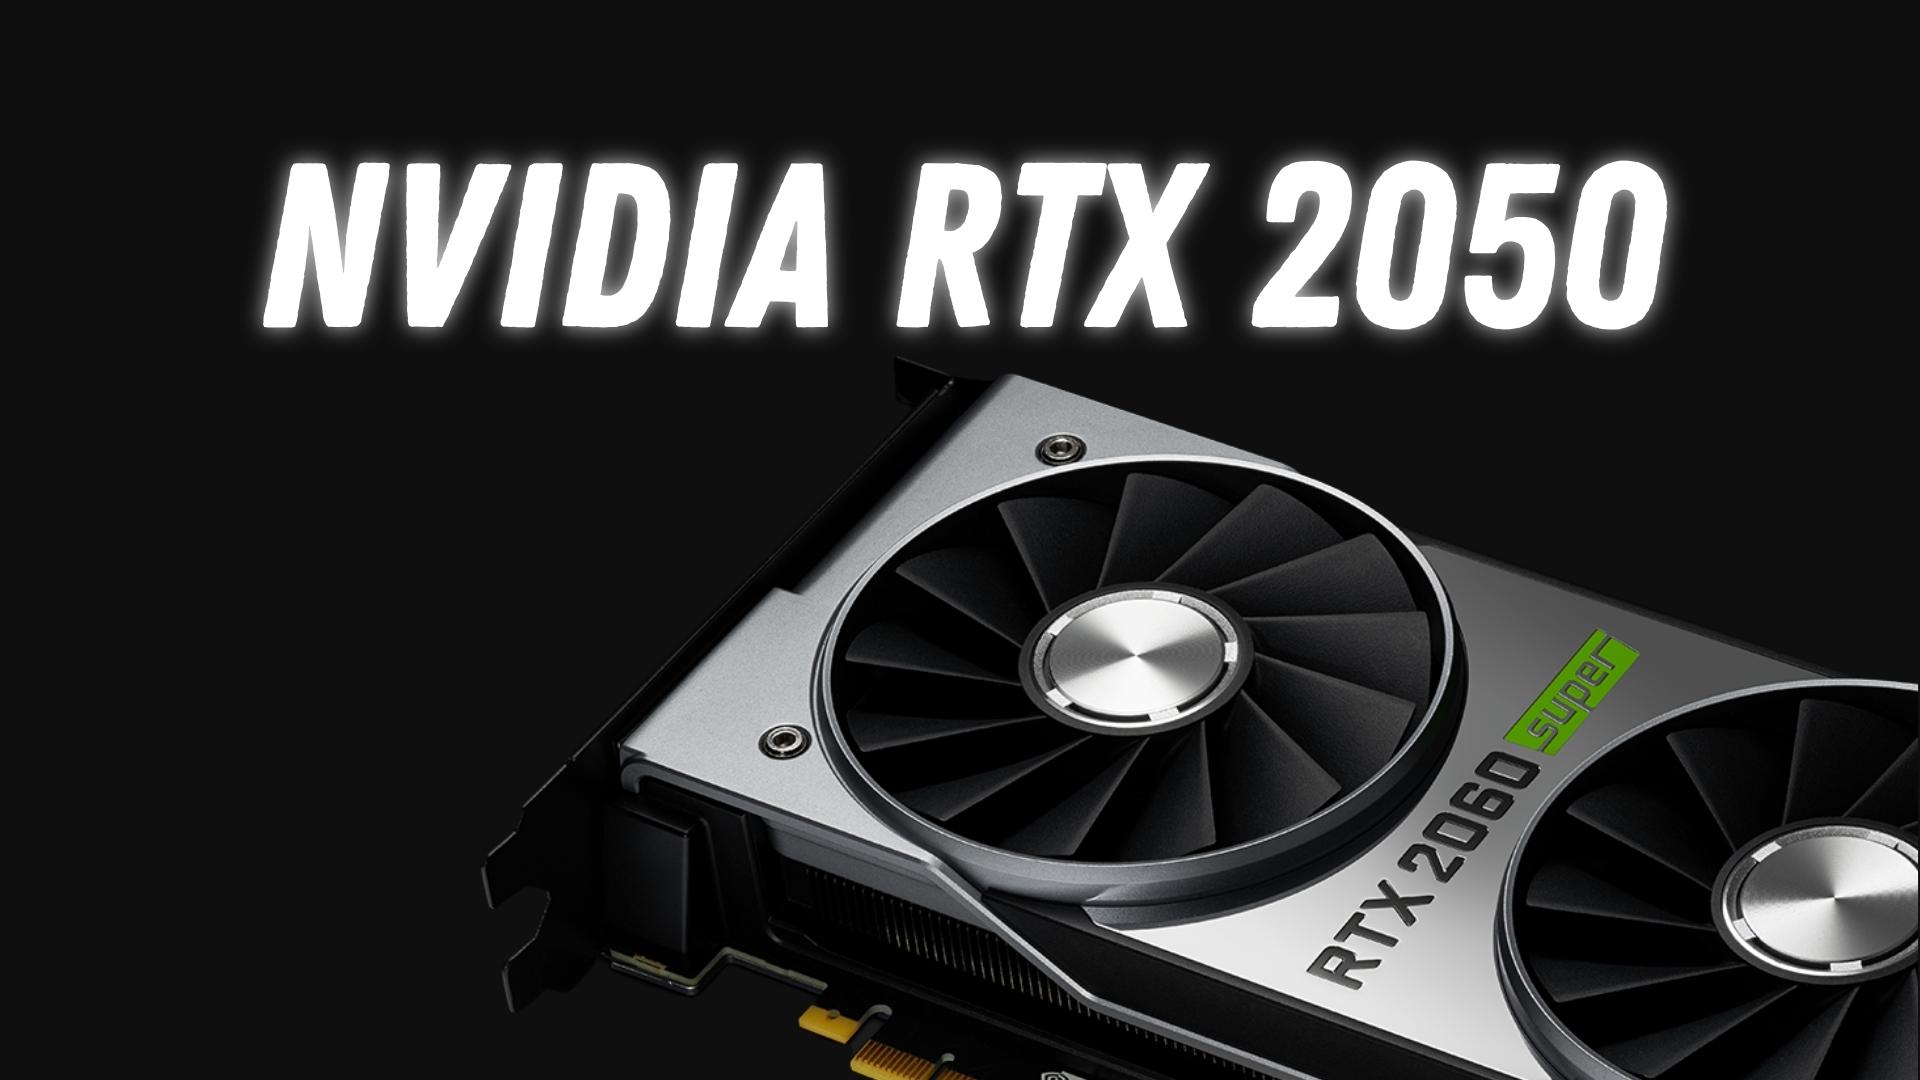 Nvidia RTX 2050 laptop GPU might power affordable laptops TrueTech